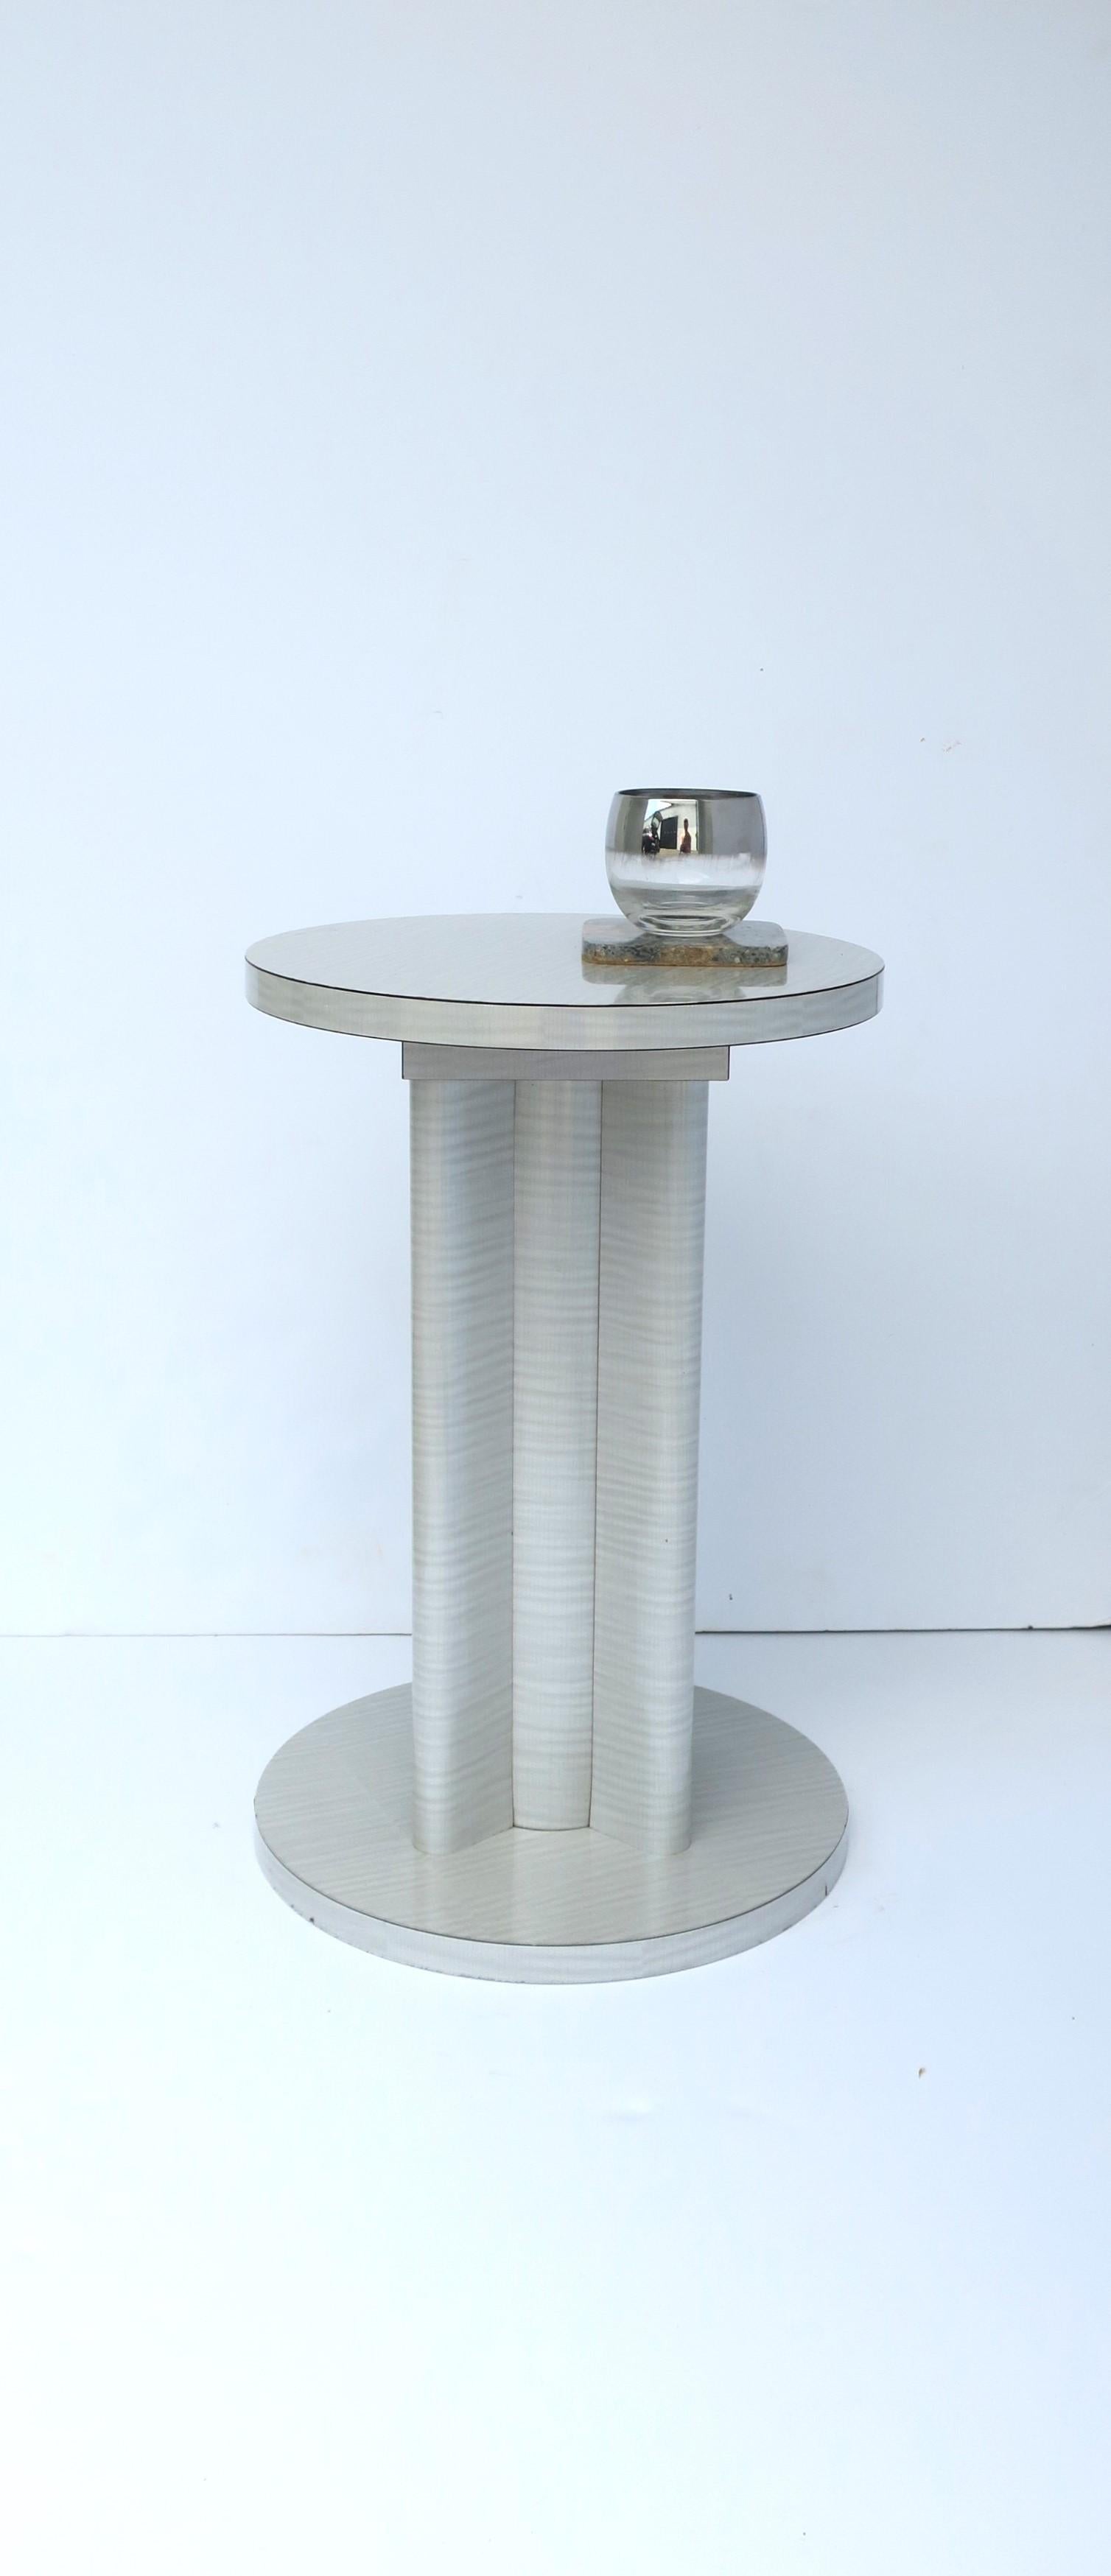 Art Deco Revival Modern Drinks Side Gueridon Tisch Silber Grau, ca. 1970er Jahre (Ende des 20. Jahrhunderts) im Angebot